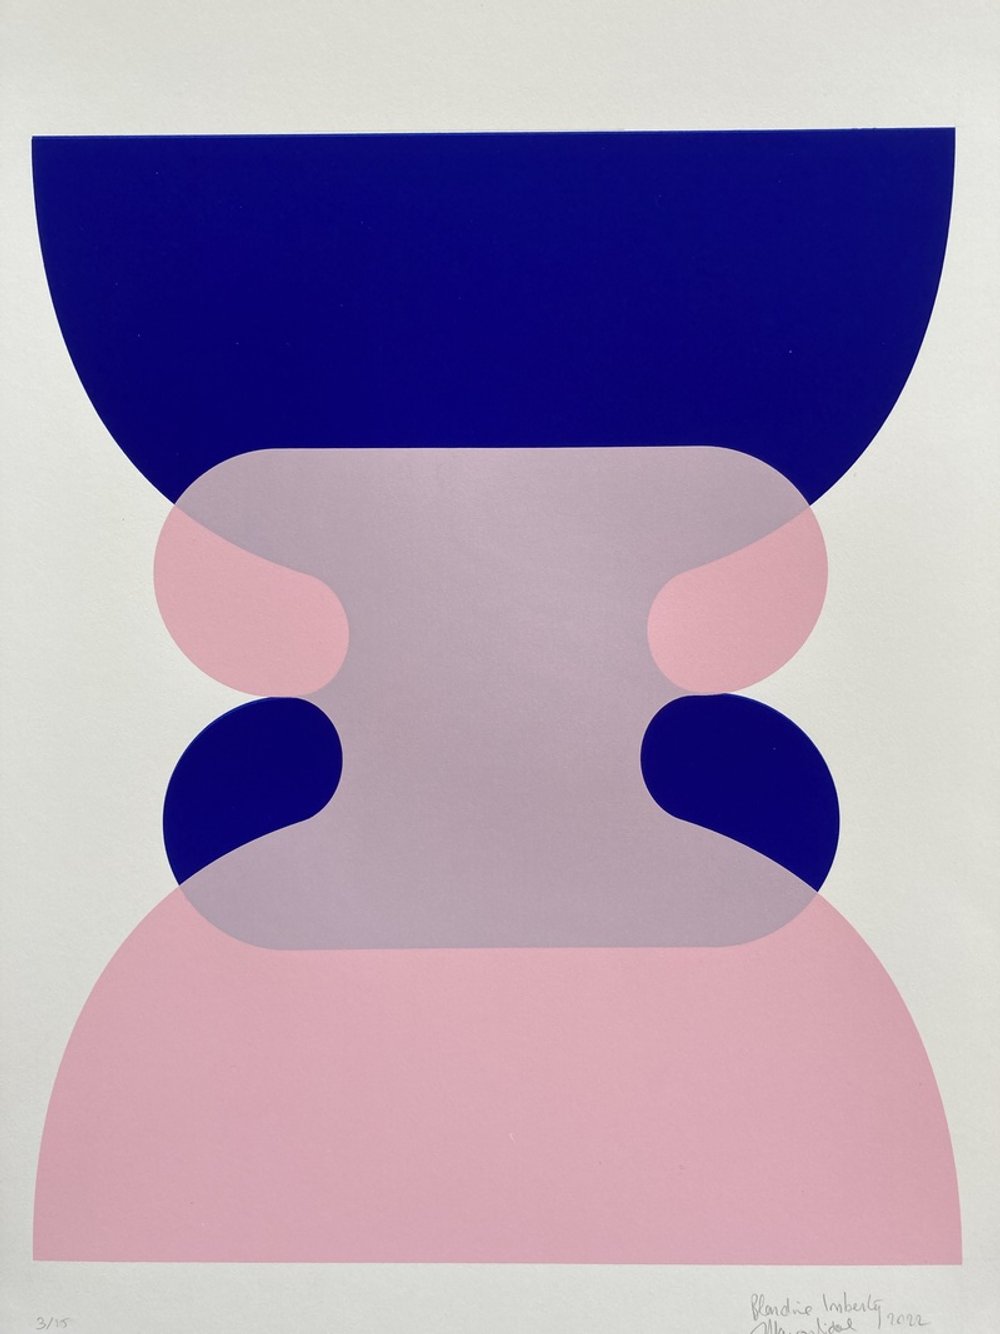 Collaboration Marion Vidal Carnet Chouette Blandine Imberty - Serigraphie Eccola Bleue et Rose - Forme 2.jpeg